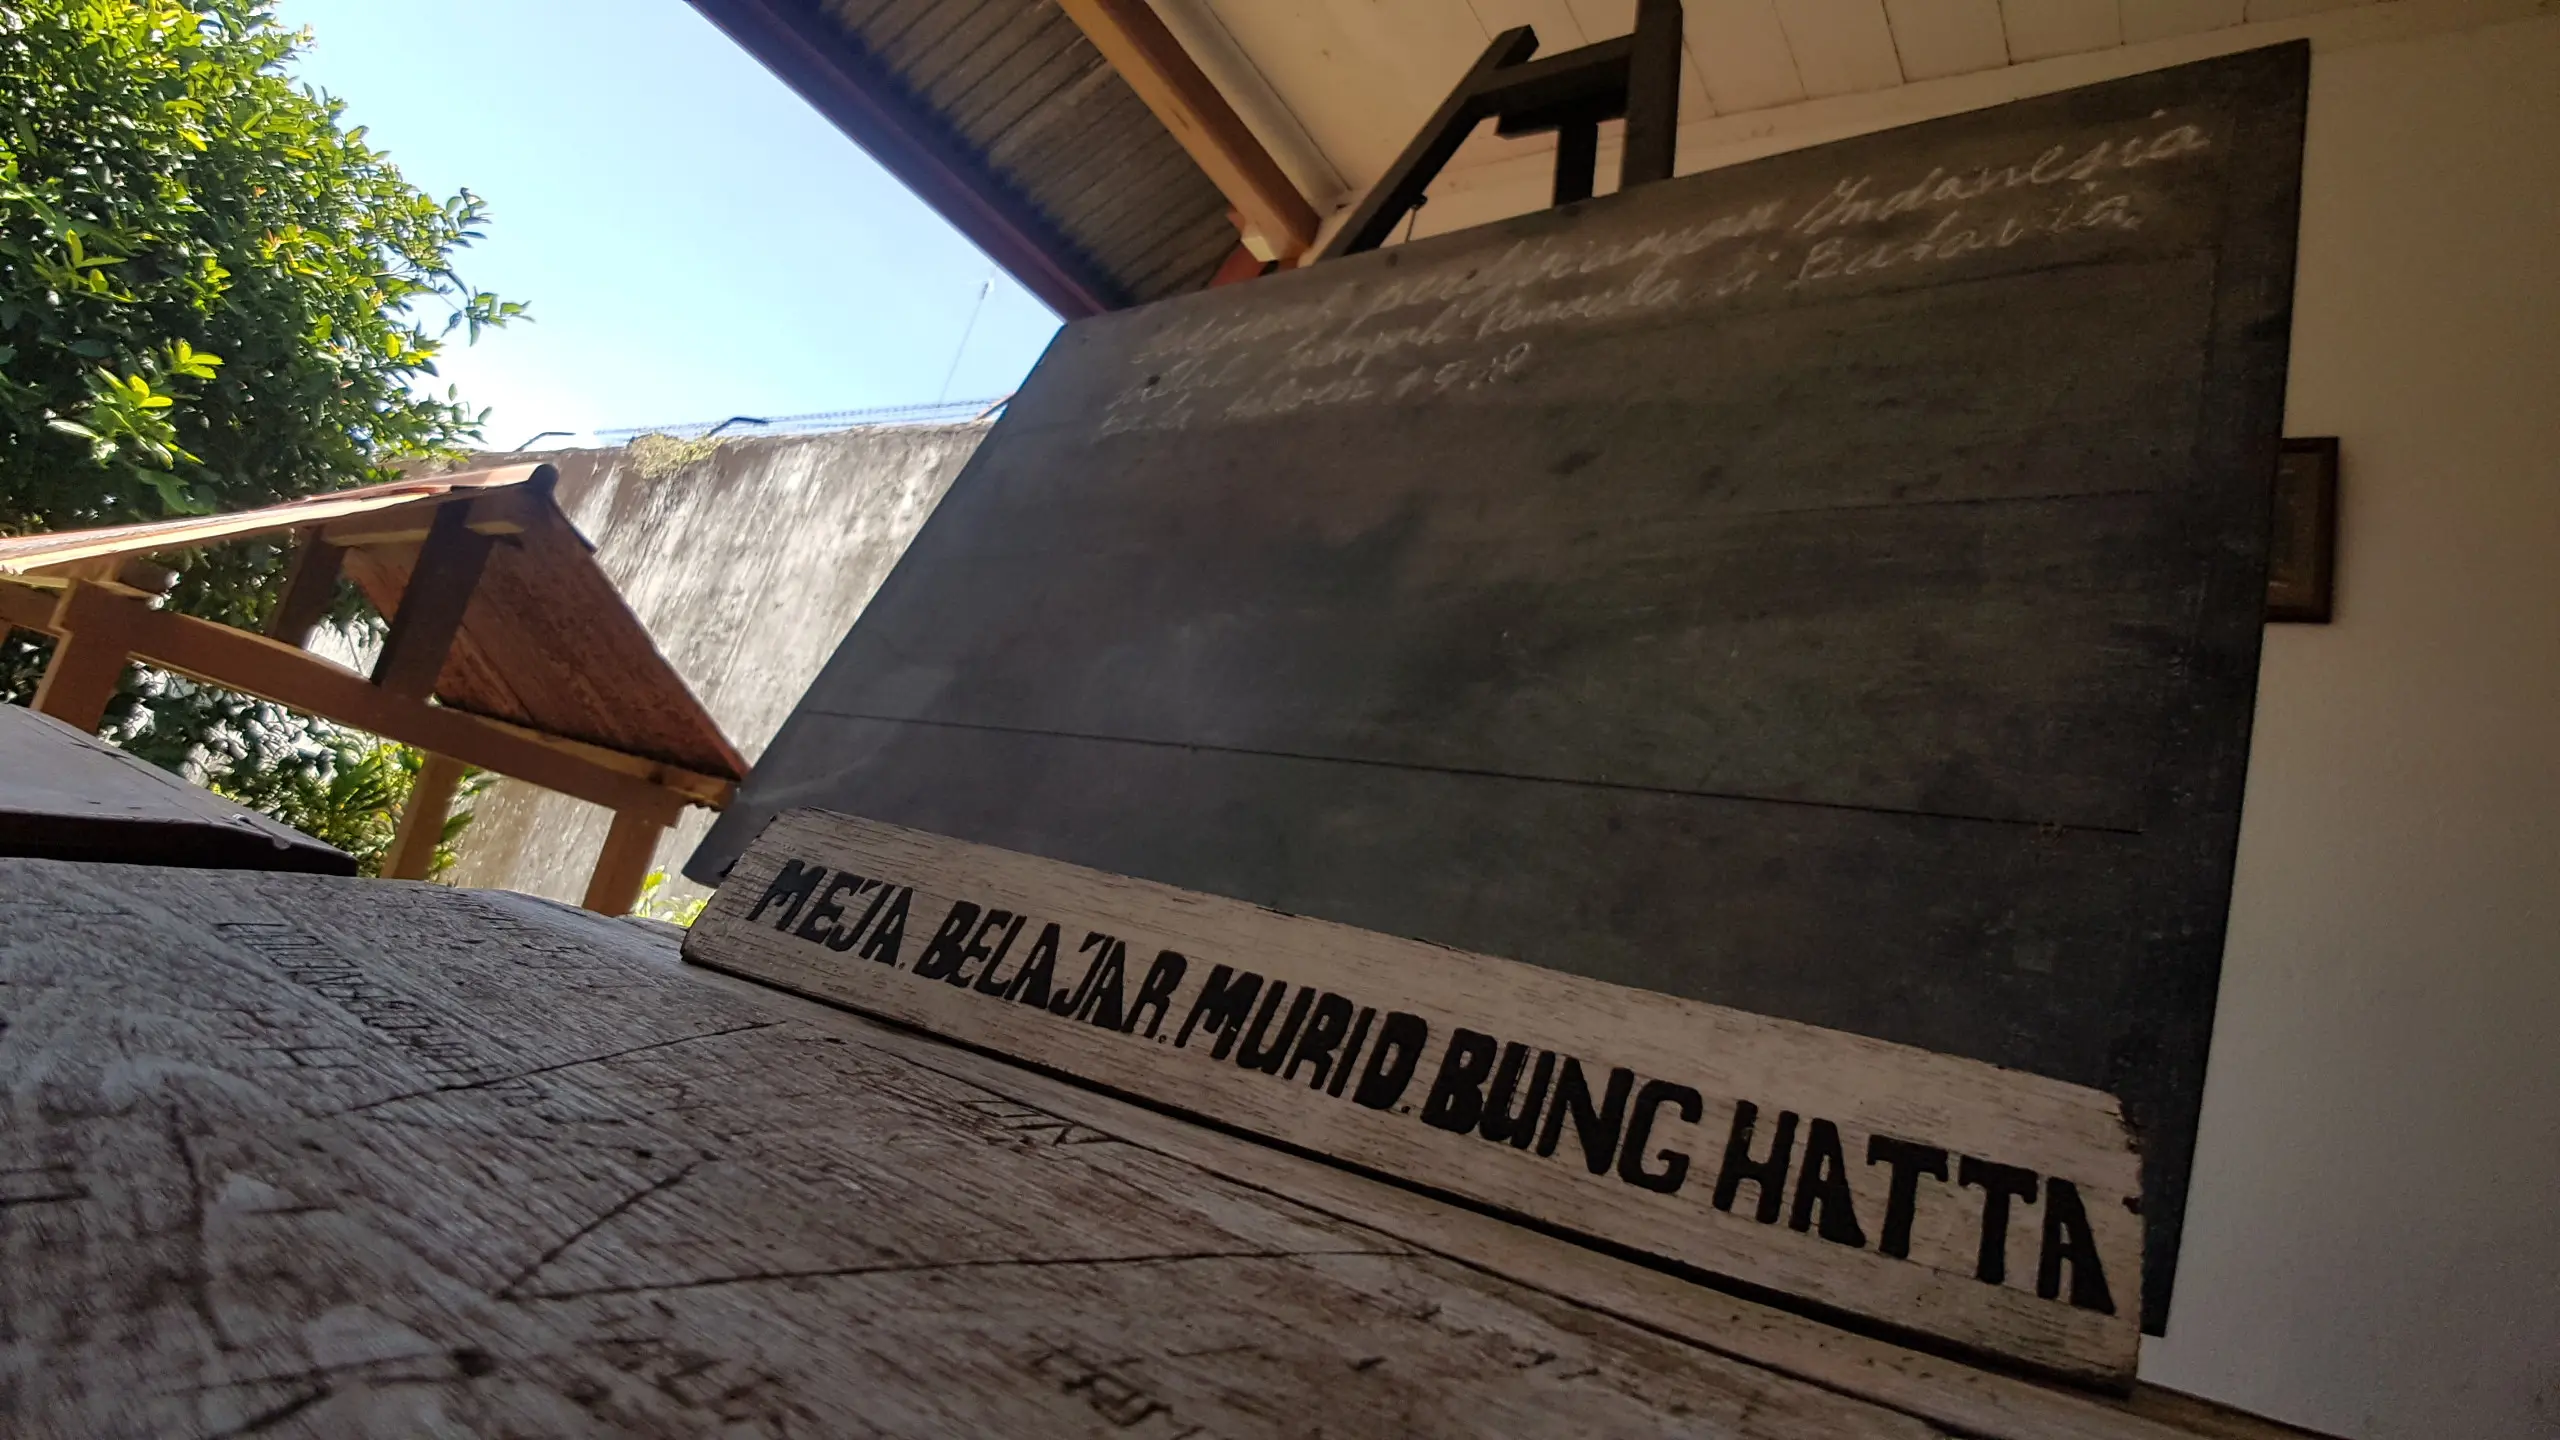 Meja dan papan tulis yang digunakan Mohammad Hatta untuk mengajar anak-anak warga sekitar di dekat rumah pengasingan di Jalan Hatta, Desa Dwi Warna, Kecamatan Banda, Banda Neira, Maluku. (Liputan6.com/Aditya Eka Prawira)